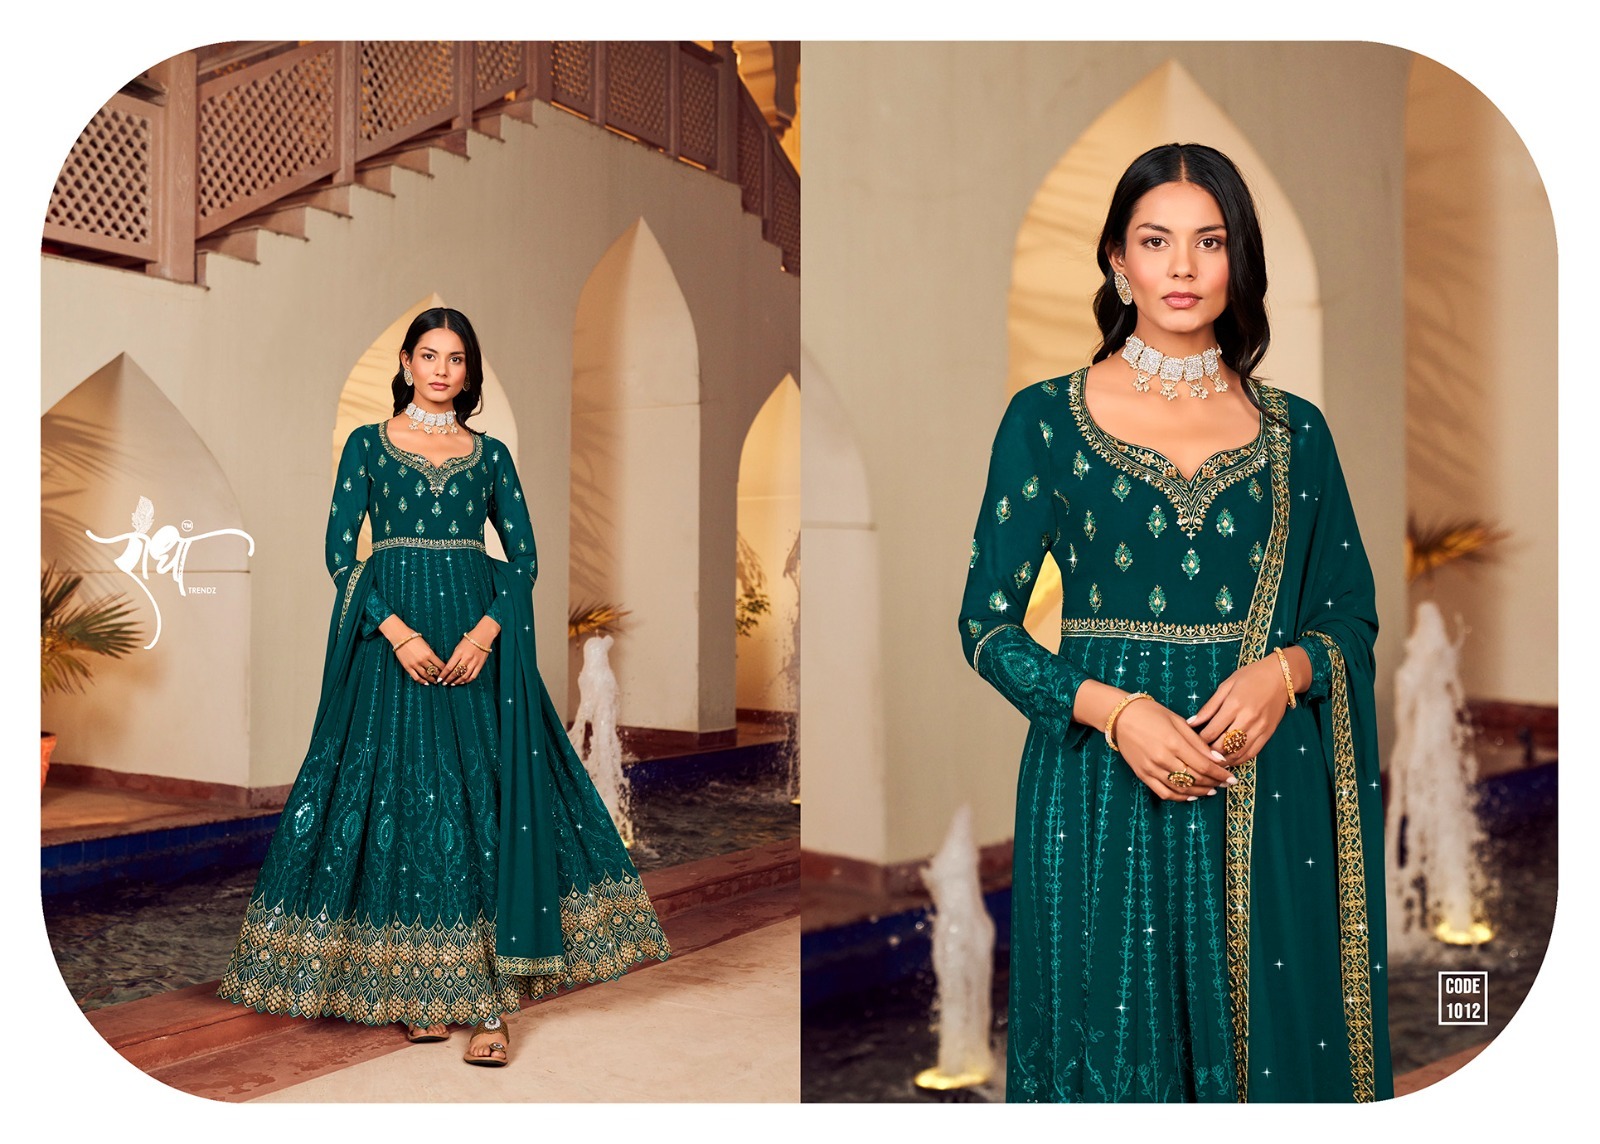 Floral Vol 2 Radha Trendz Georgette With Work Readymade Anarkali Suits